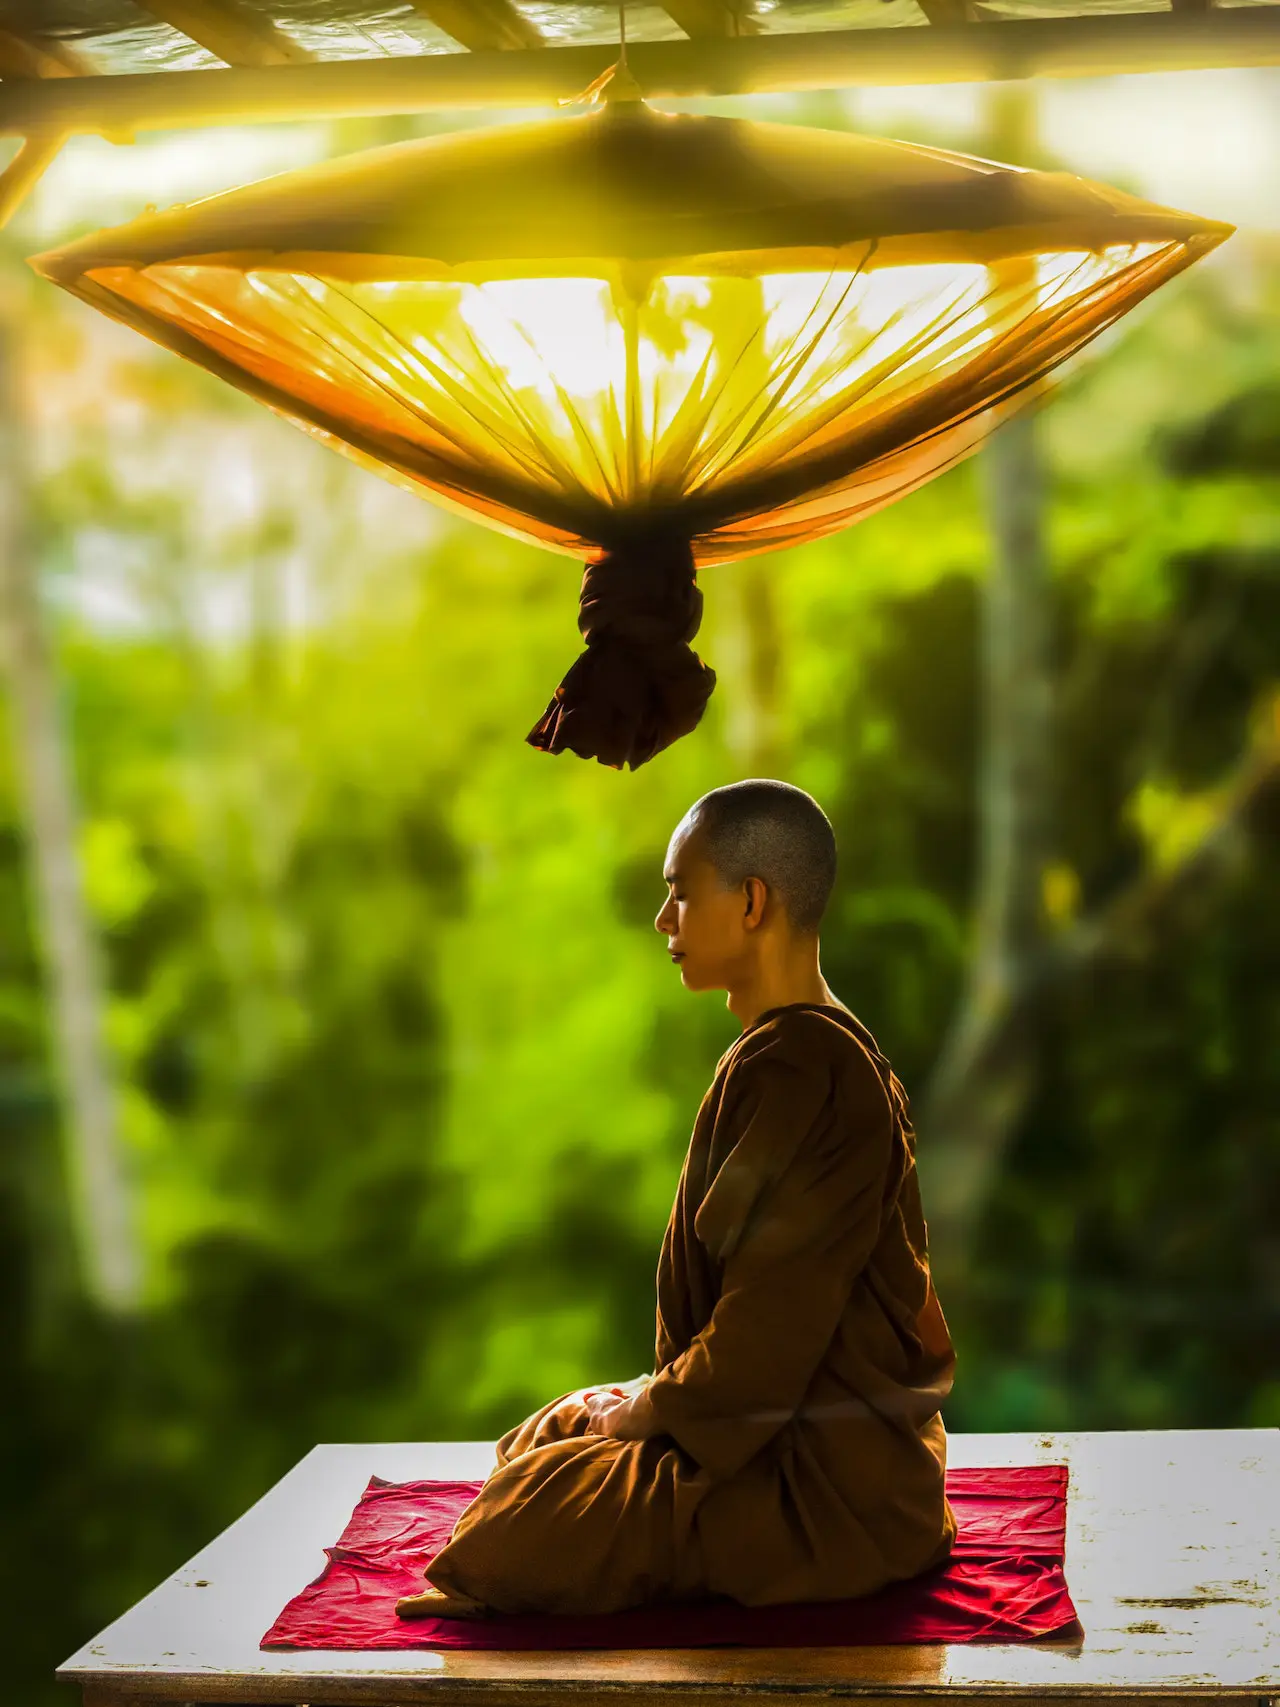 Meditation as a way to treat addictions